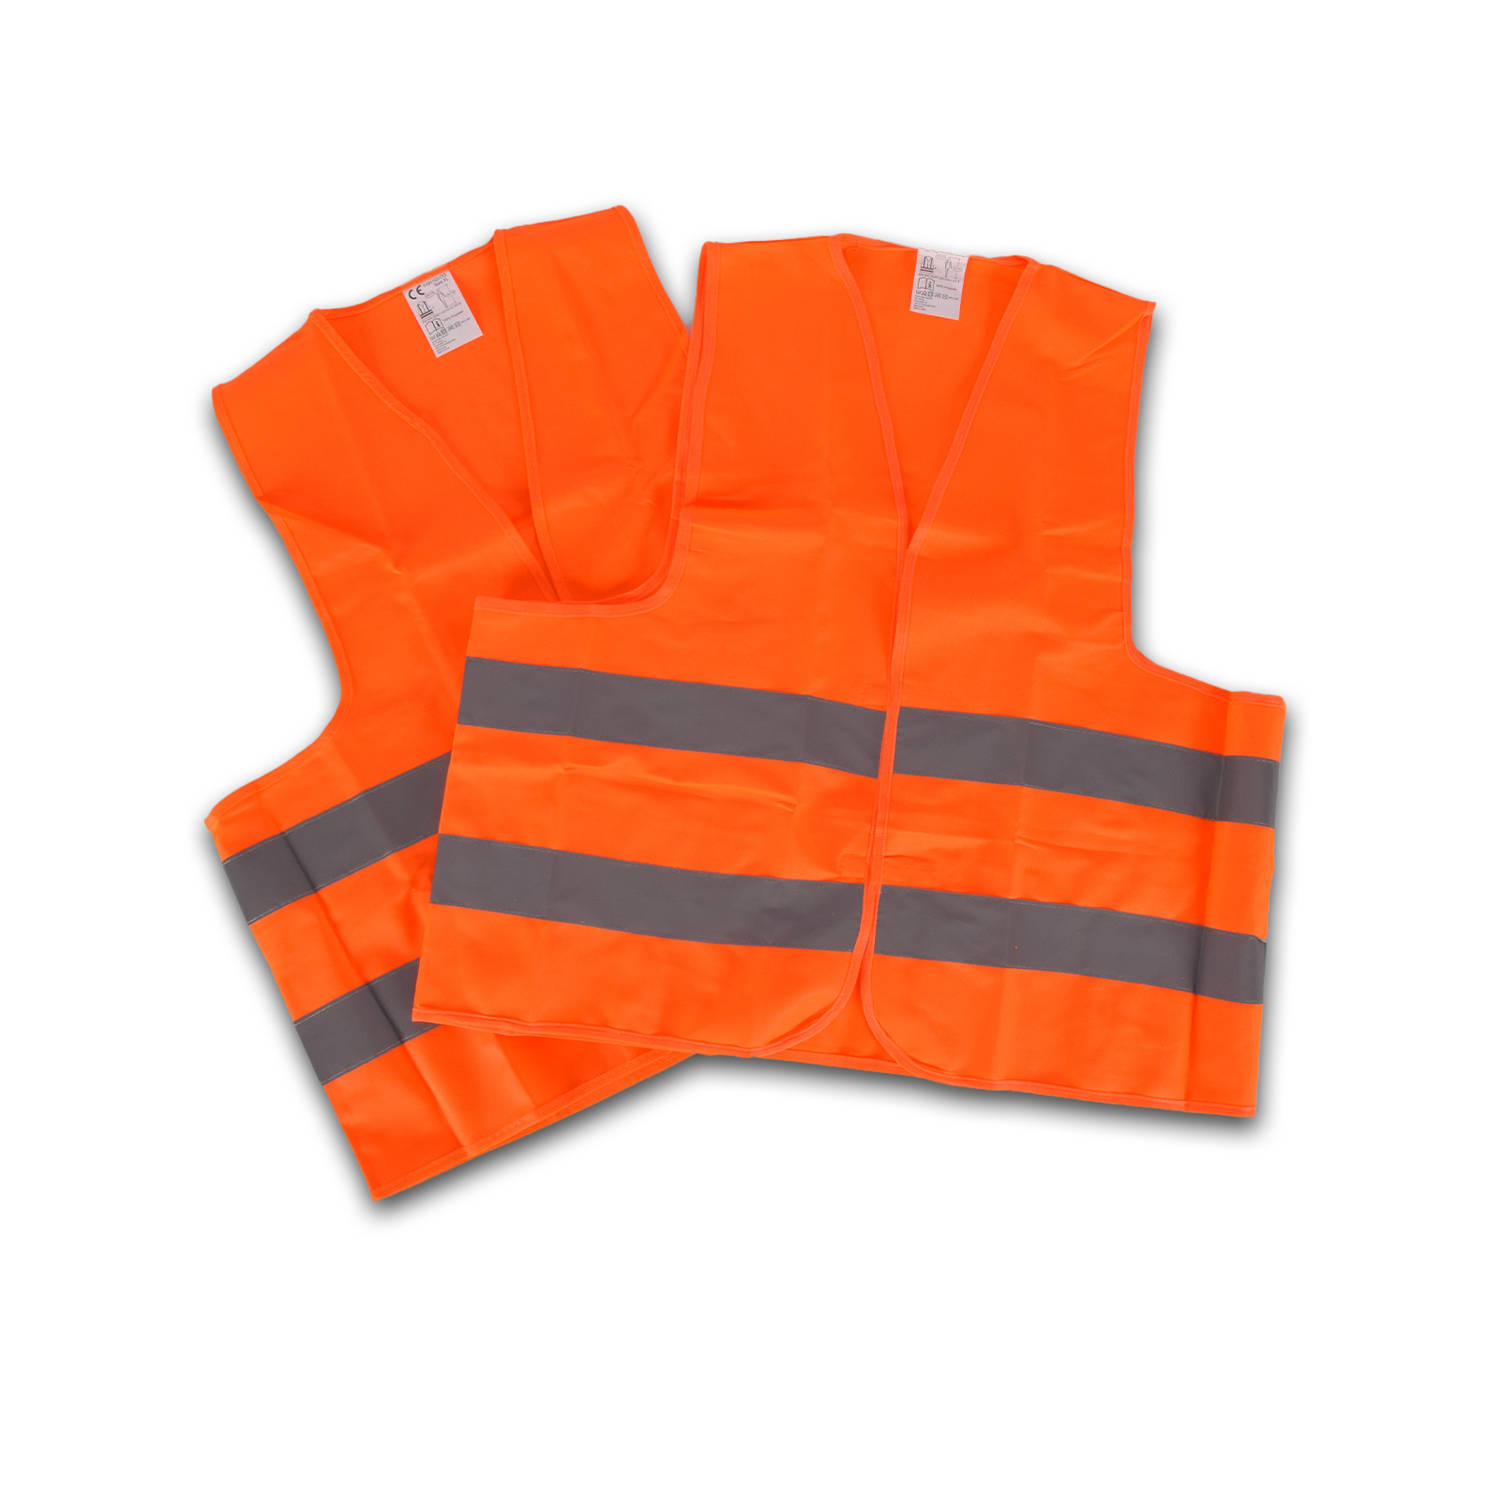 Veiligheidsvest Oranje Reflectievest Veiligheids Vest One size fits all polyester Fluorescerend vest